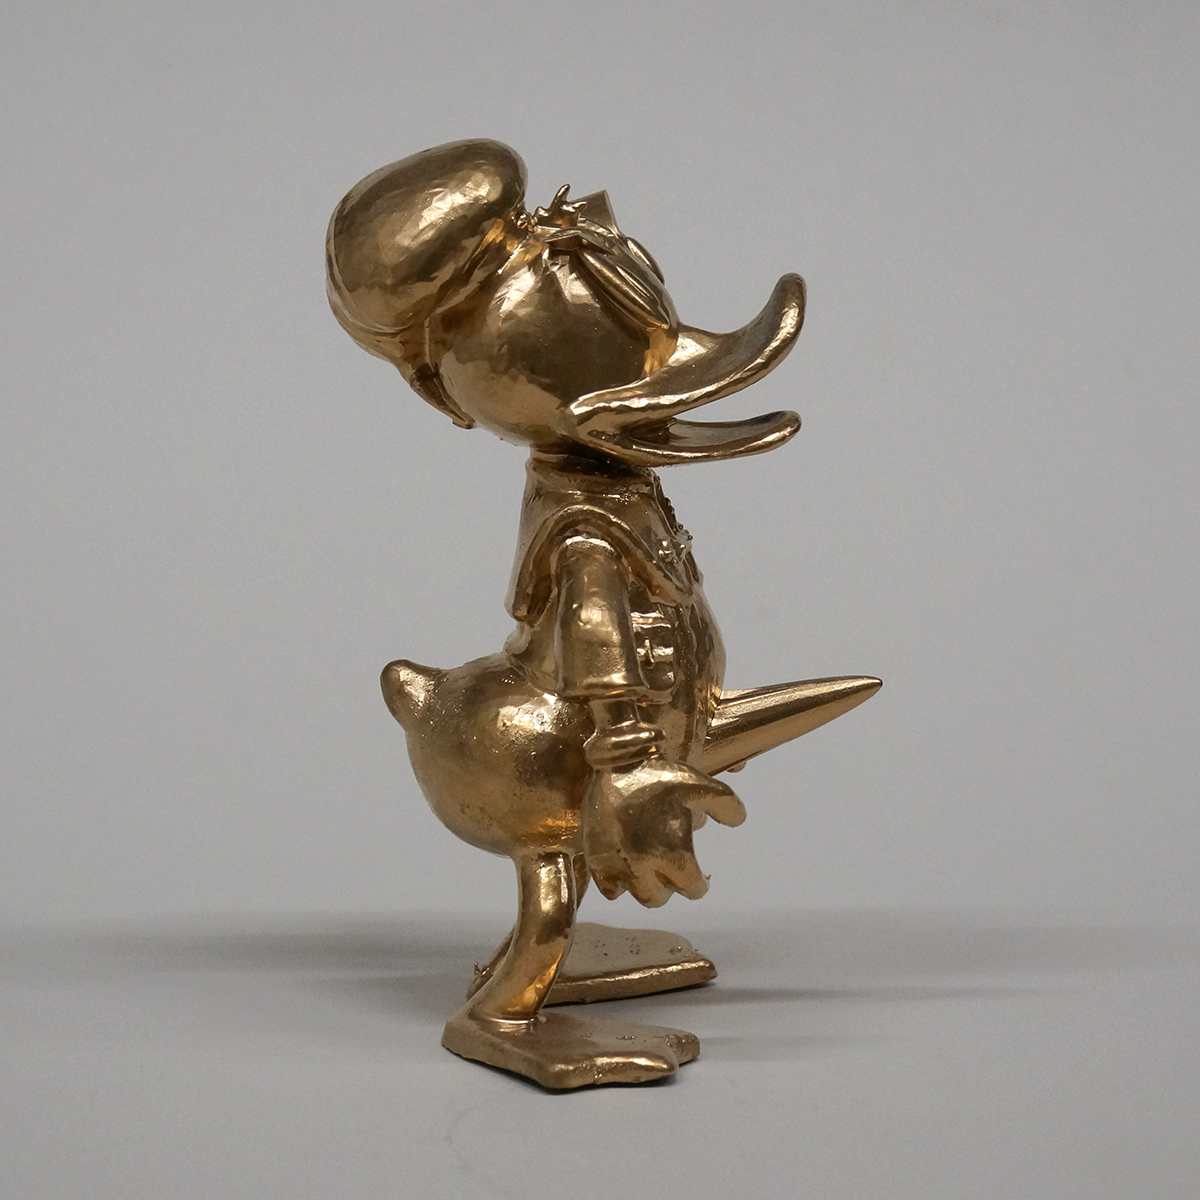 Felikz the Fazke: Donald Dick - Gold - Artwork